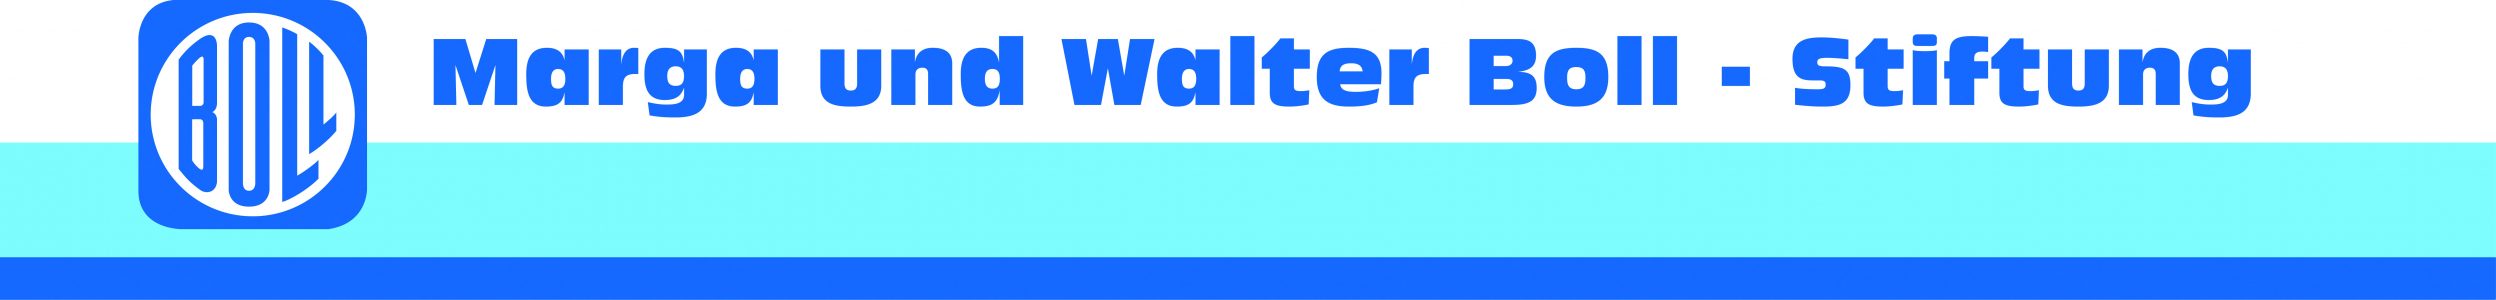 Logo Marga und Walter Boll-Stiftung